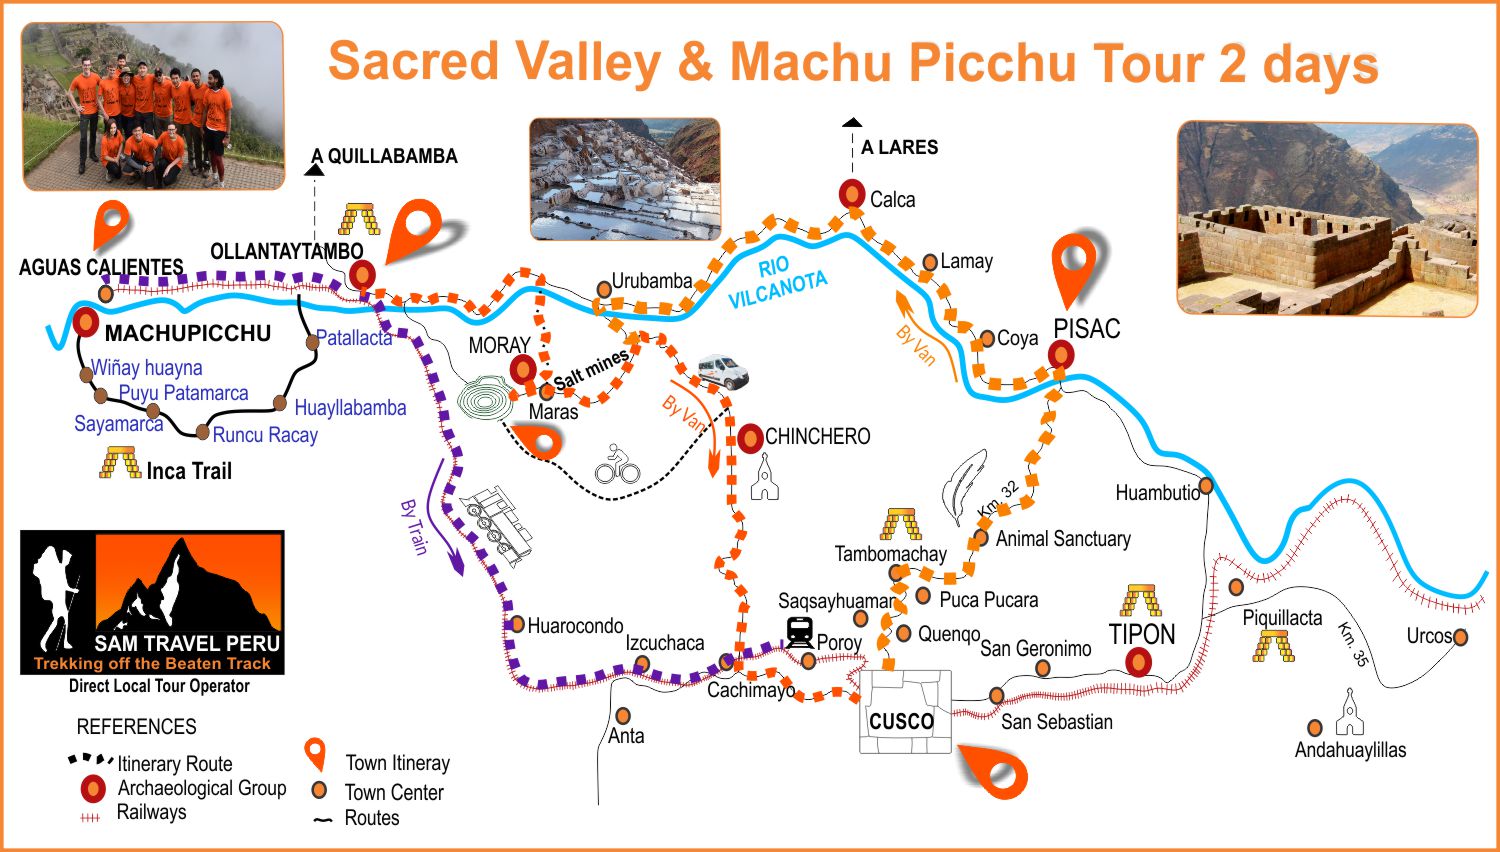 Sacred Valley & Machu Picchu Tour 2 days